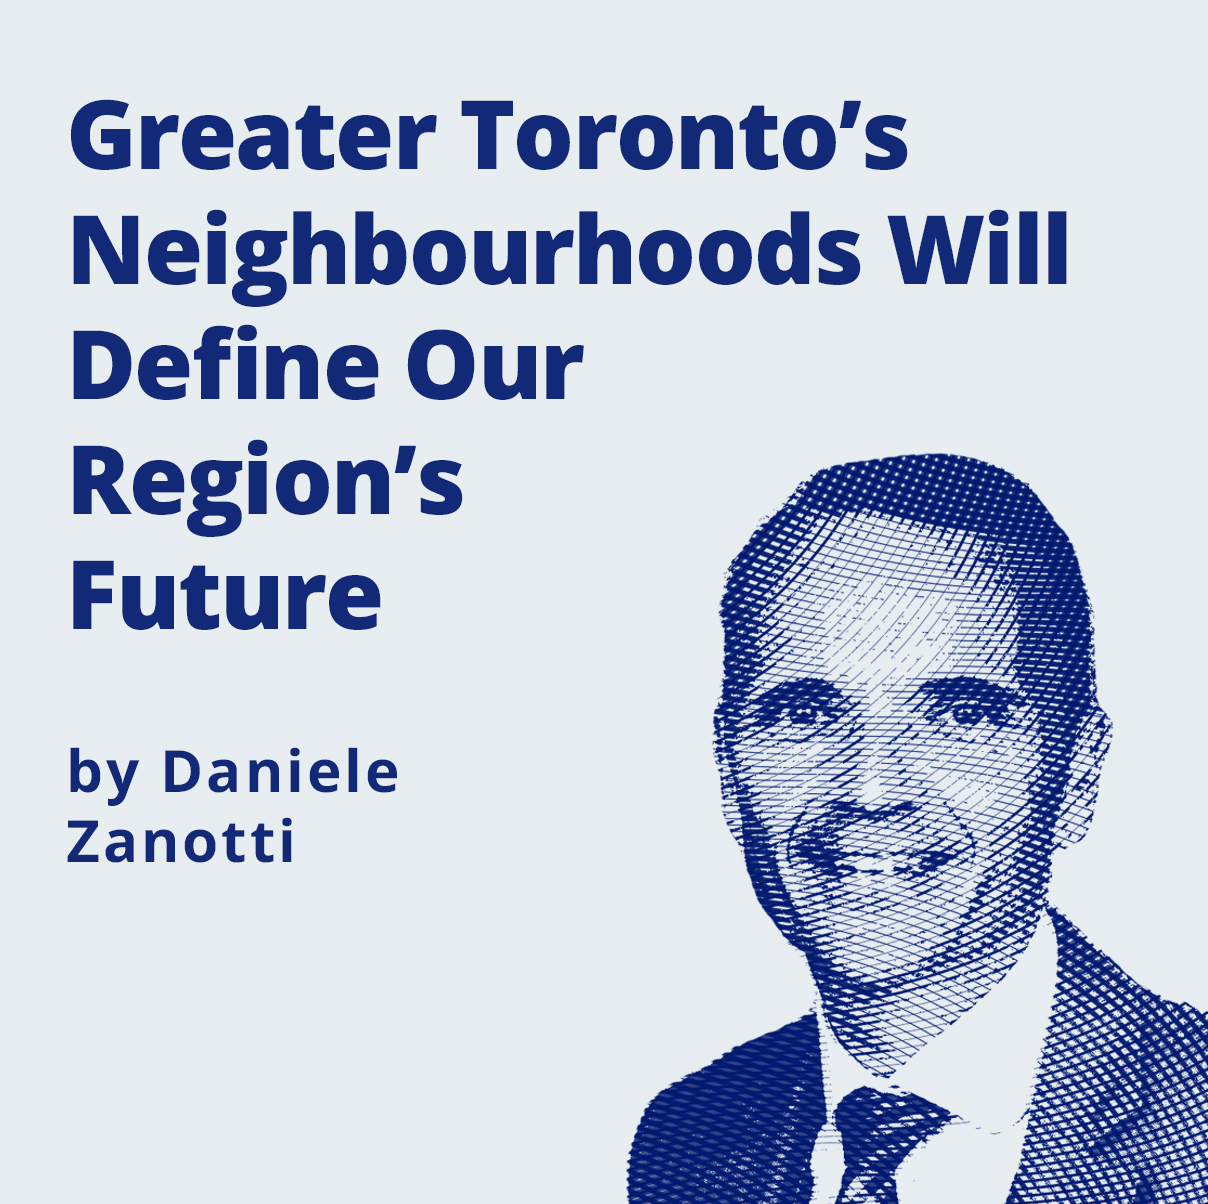 Image -  Greater Toronto's Neighbourhoods Will Deine Our Region's Future by Daniele Zanotti